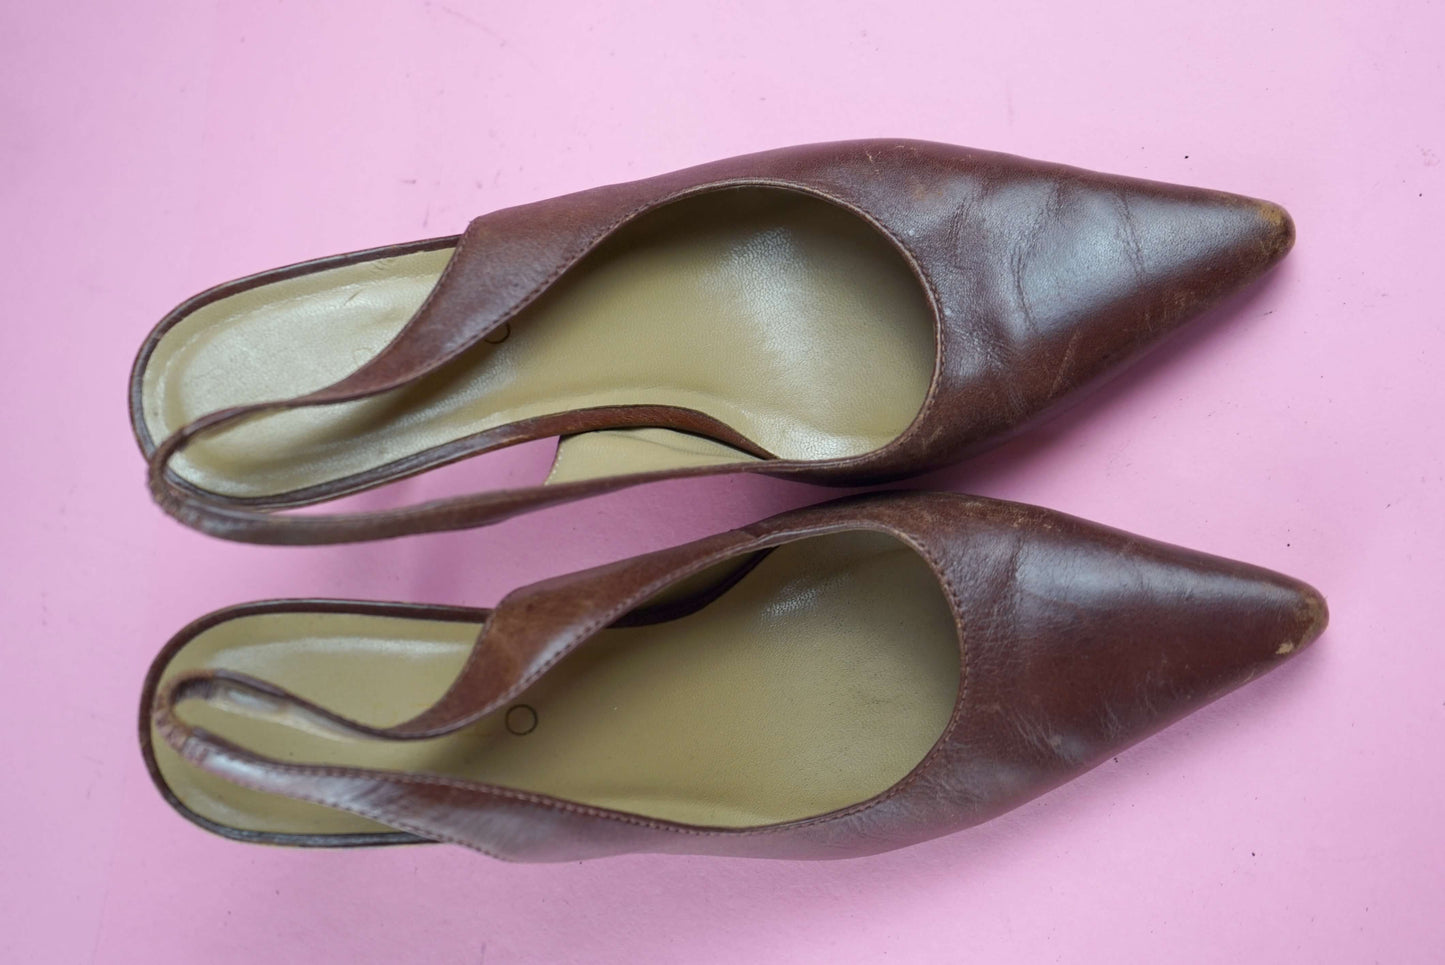 Brown Slingback Vintage Heels Pointed Toe UK Size 3-3.5/EUR 36-36.5